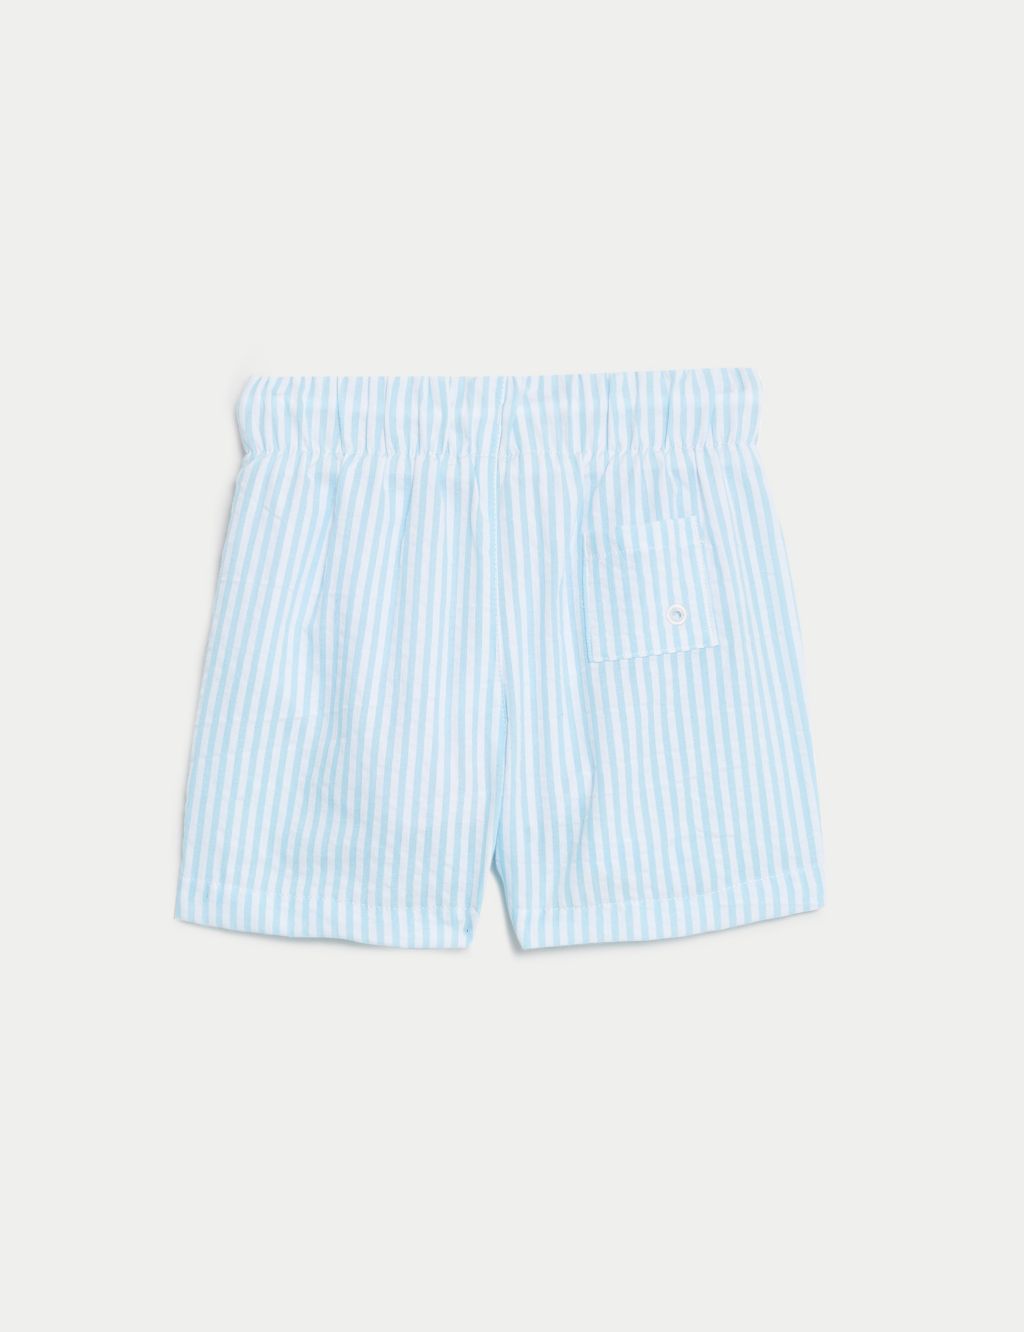 Striped Swim Shorts (0-3 Yrs) image 2